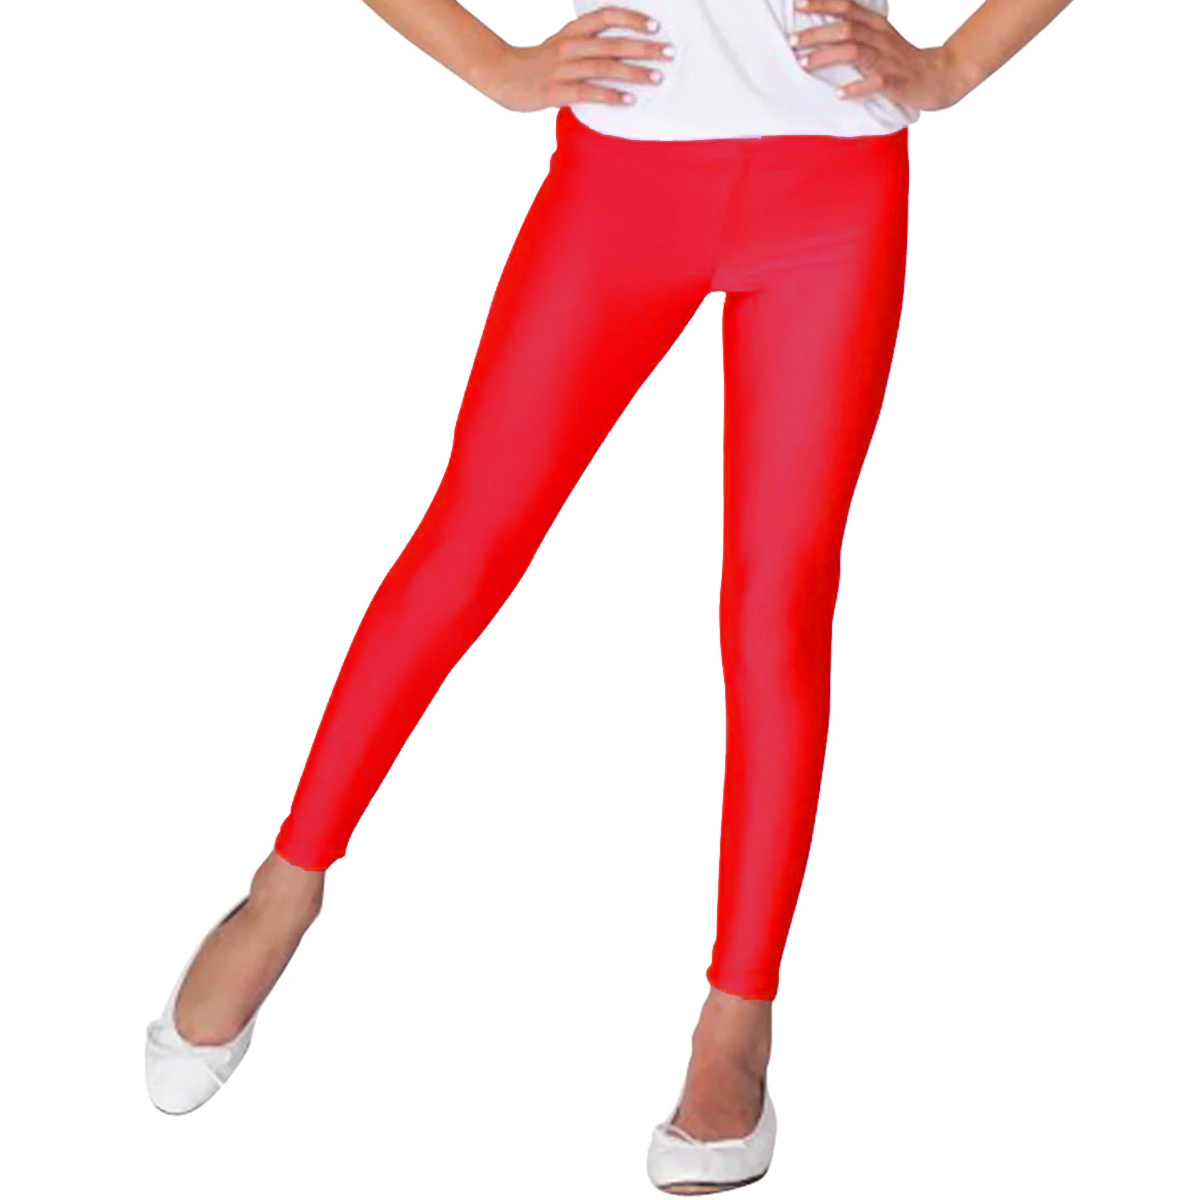 Bulk Girls' Polyester Leggings in Red, Small-Large - DollarDays